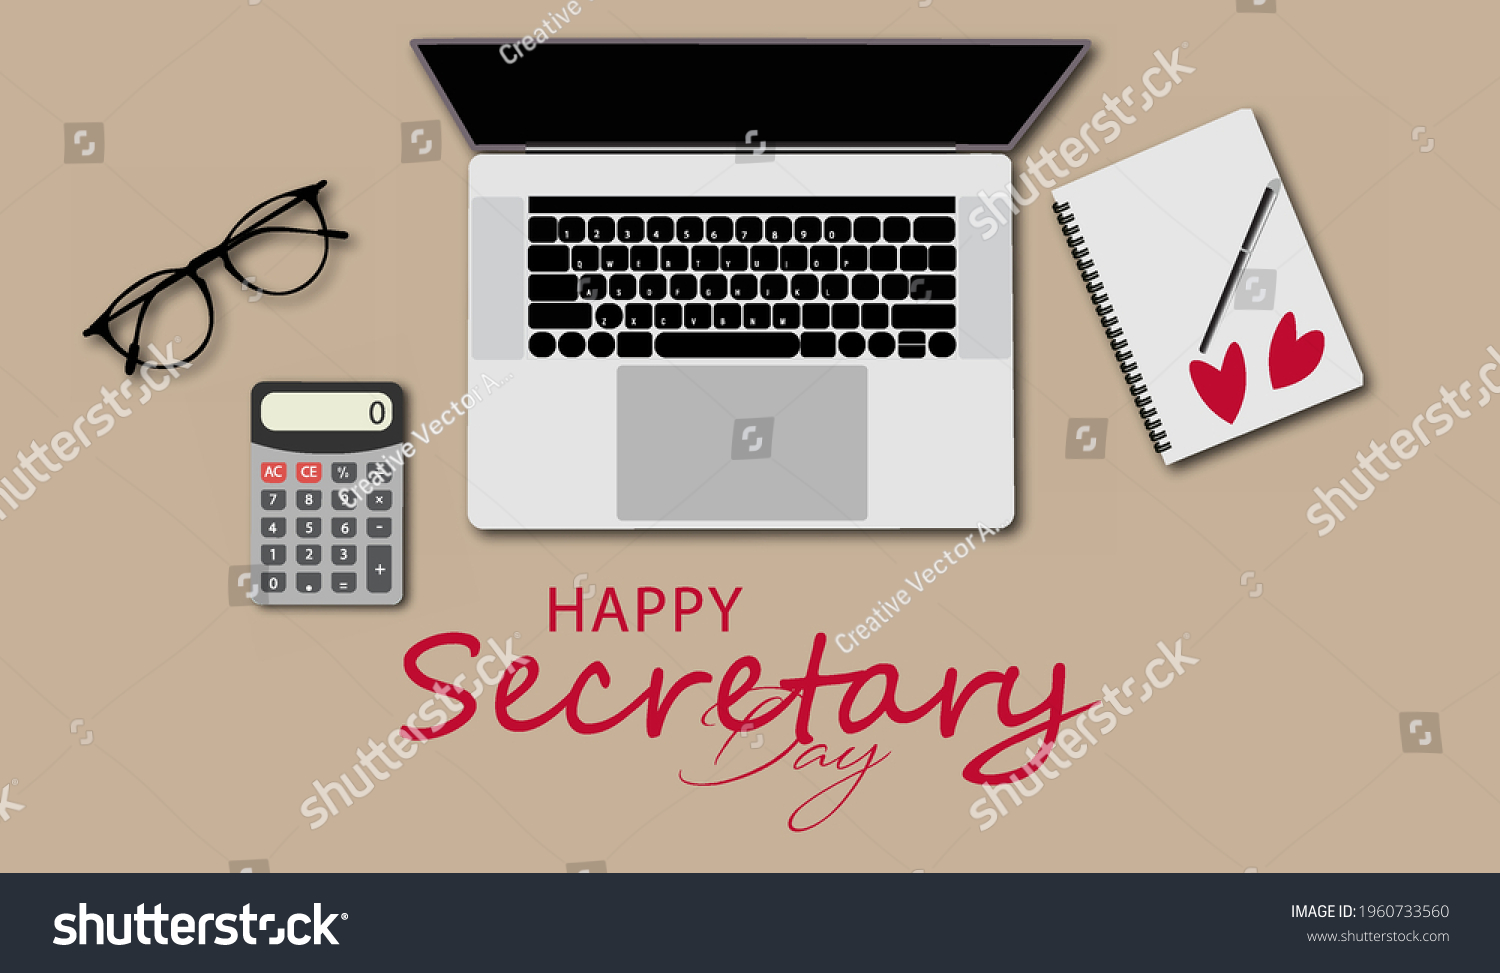 Day Secretary 5